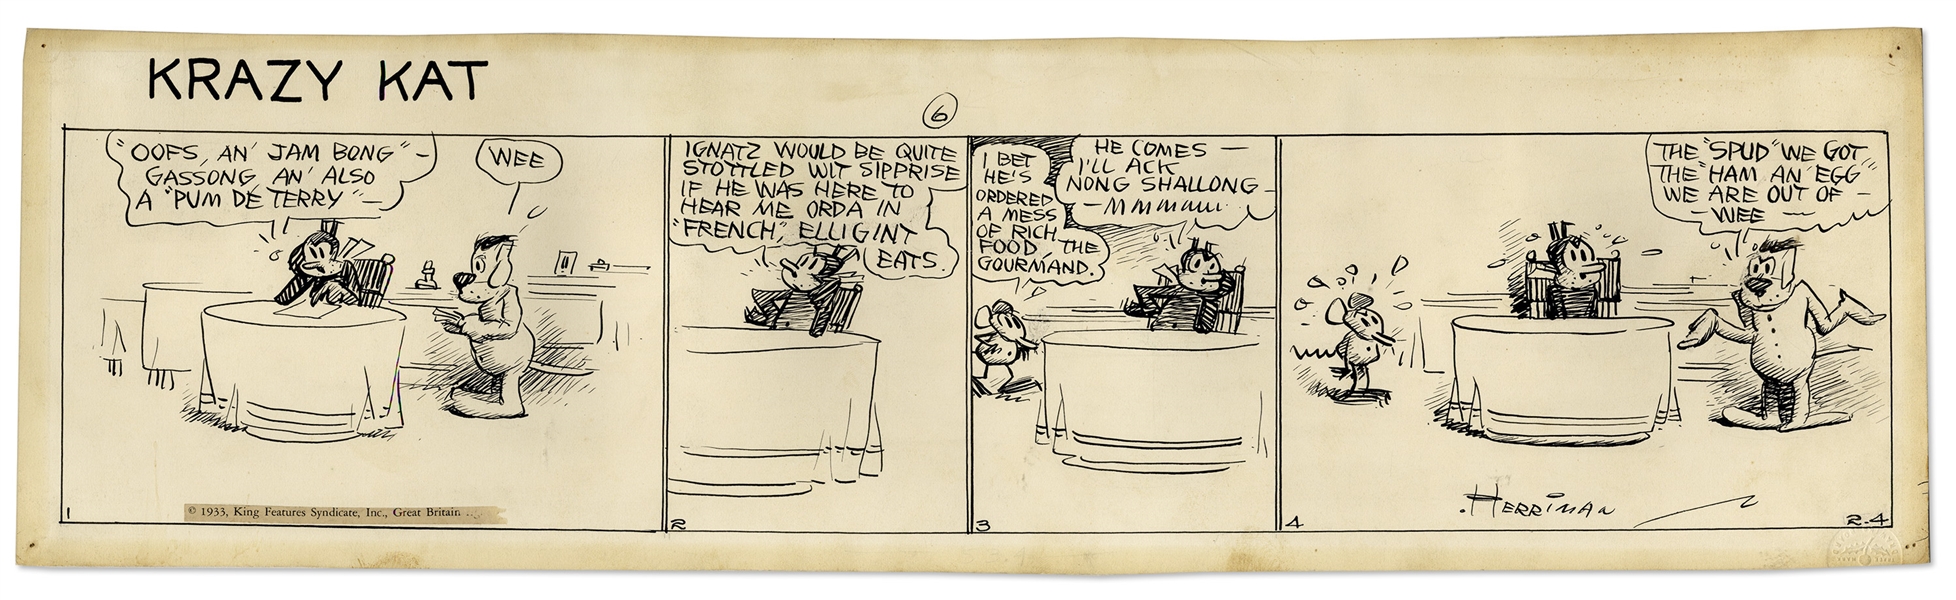 ''Krazy Kat'' Comic Strip by George Herriman From 1933